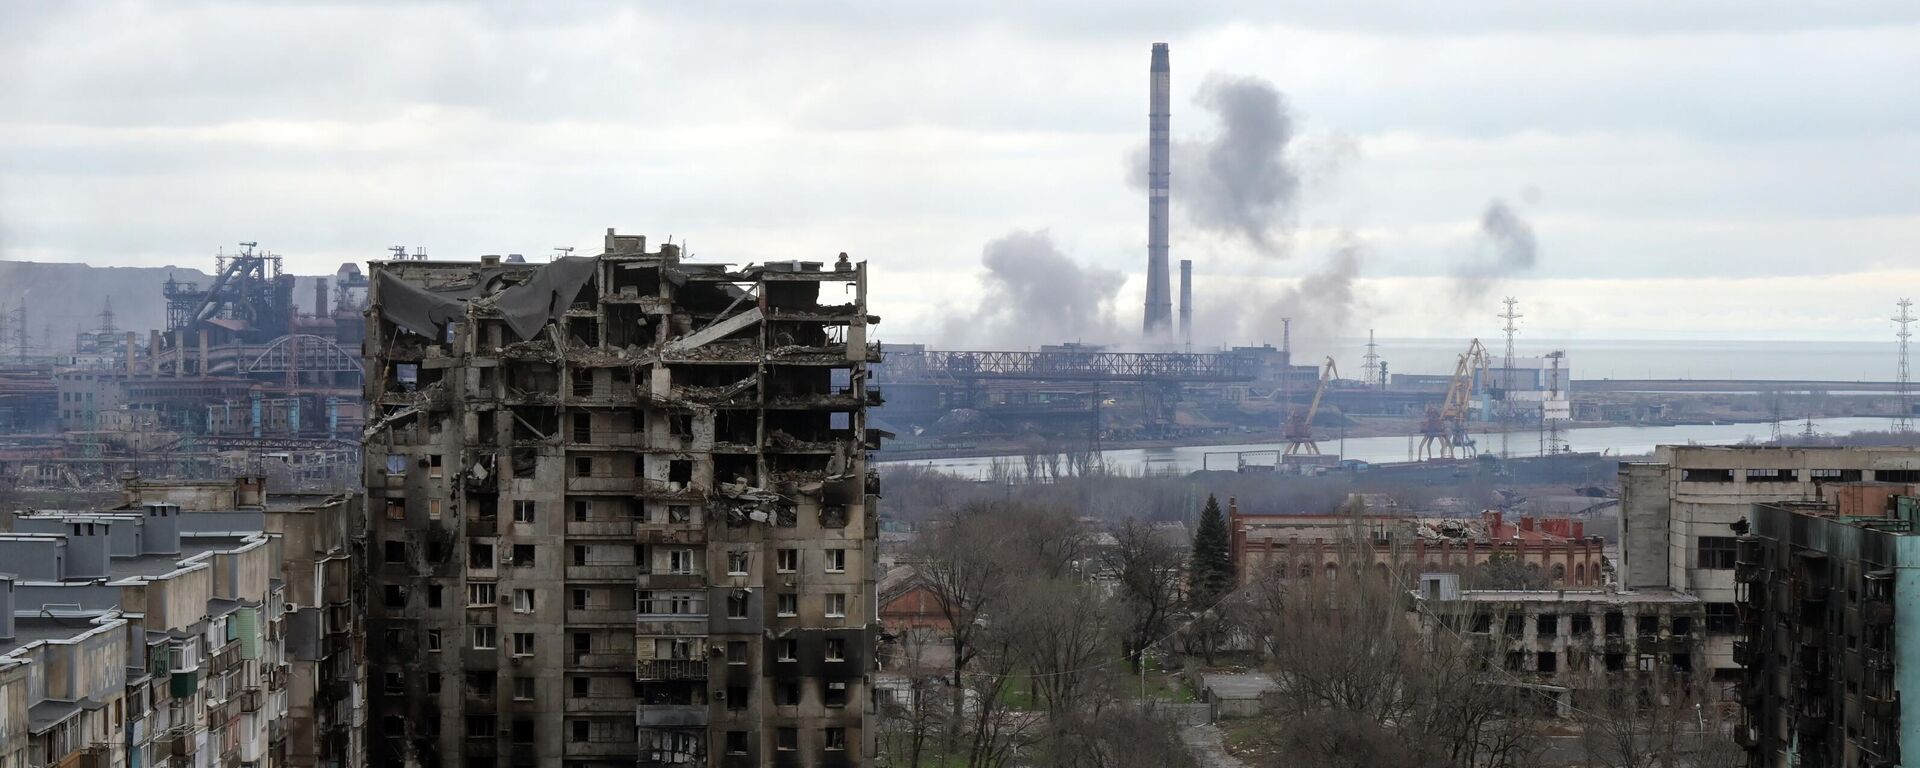 Ruined buildings near the besieged Azovstal steel plant in Mariupol - Sputnik International, 1920, 01.05.2022